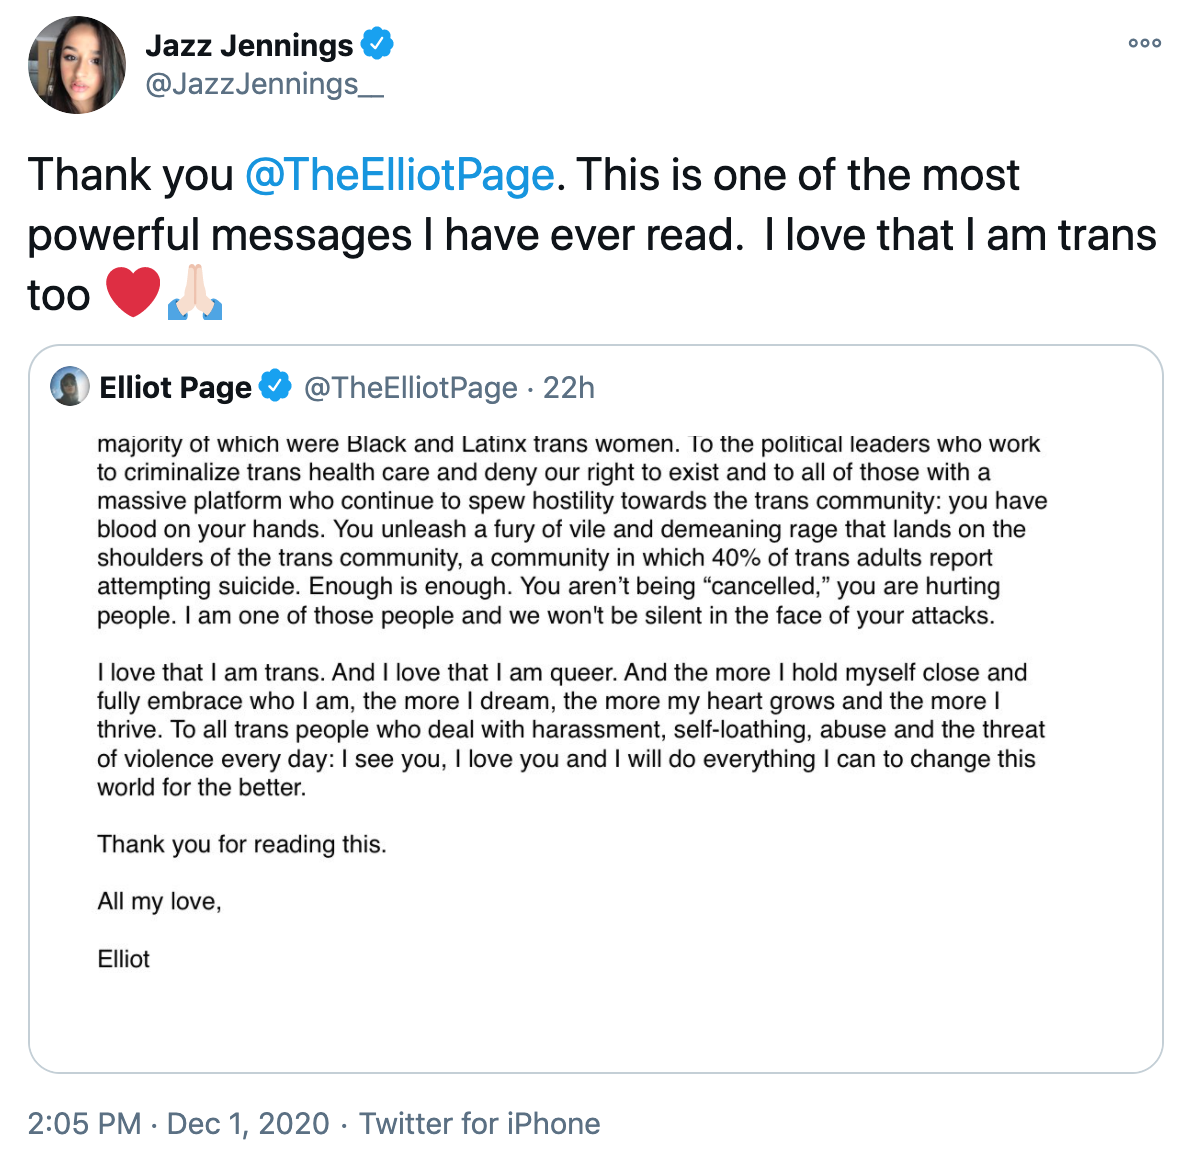 Jazz Jennings tweet about Elliot Page